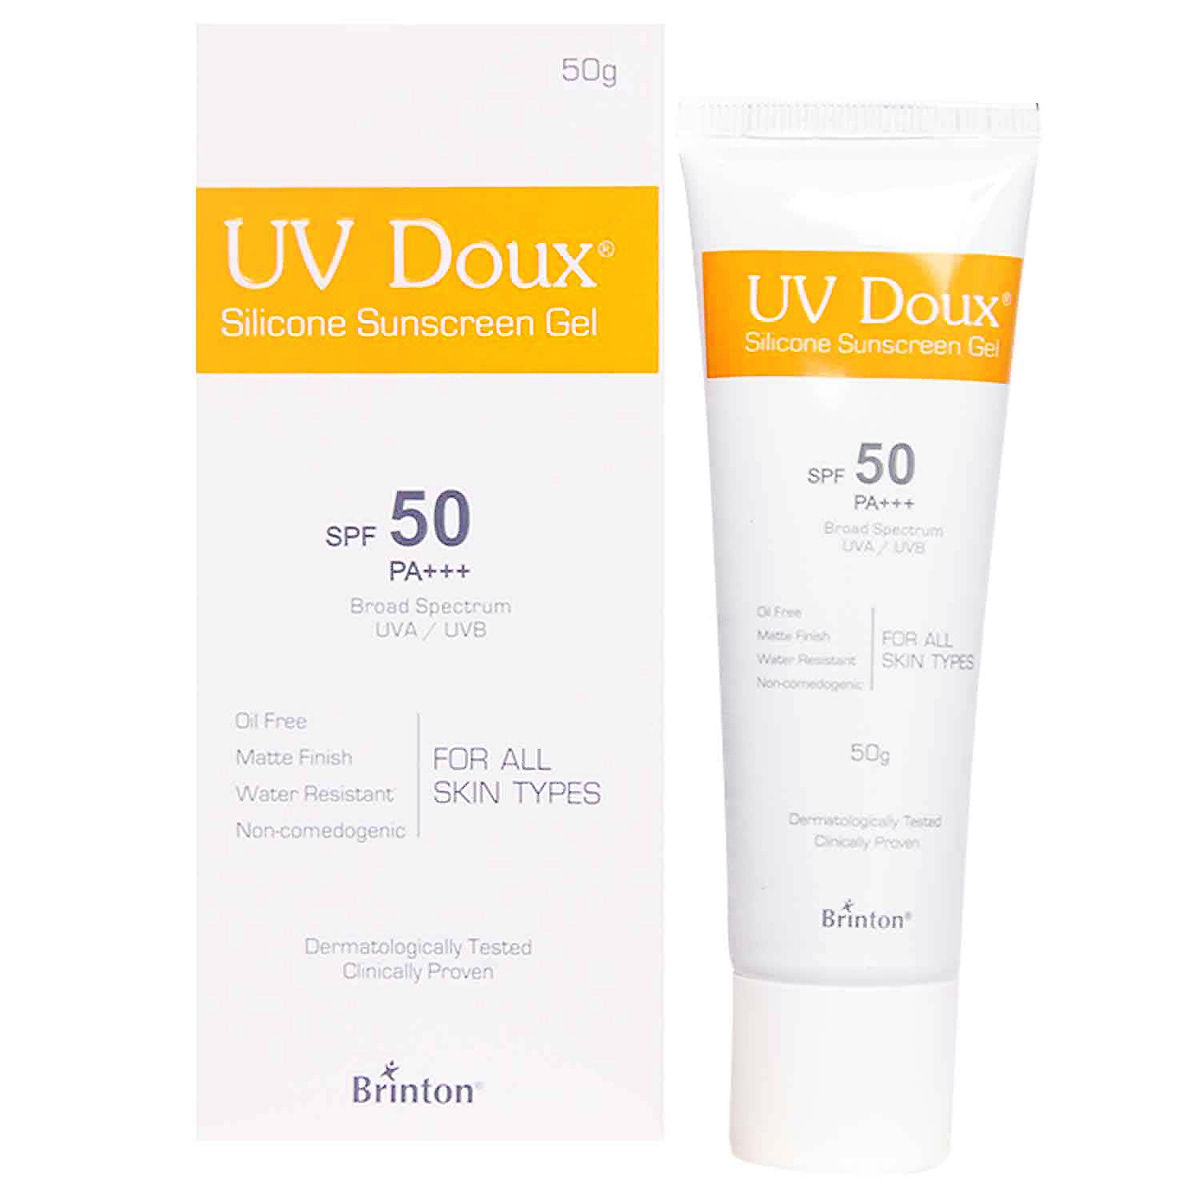 Buy UV Doux Spf 50 Silicon Sunscreen Gel 50 gm Online